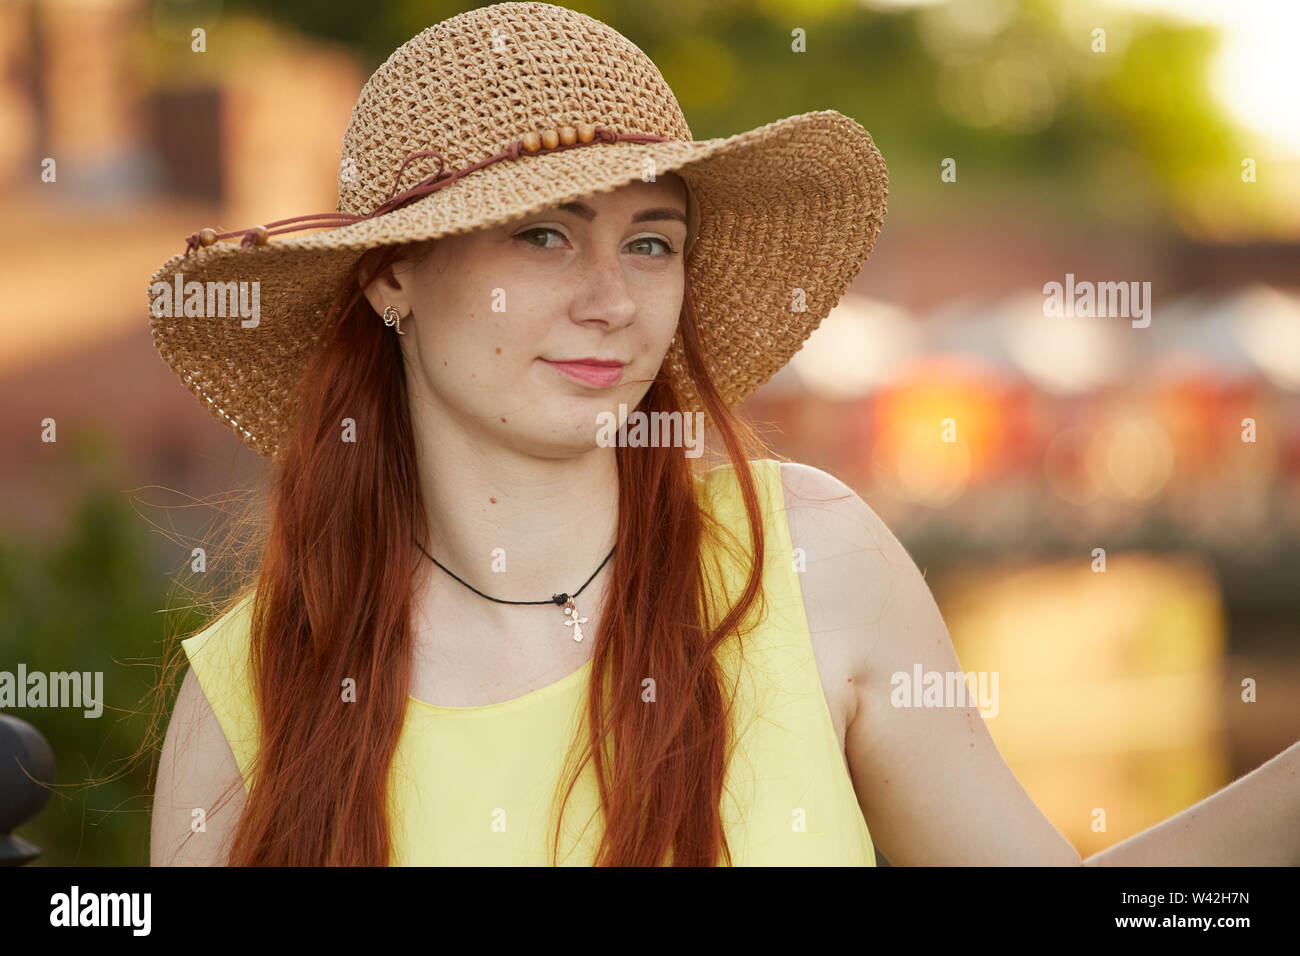 Jolie fille cheveux rouge à sun hat looking at camera, smiling Banque D'Images